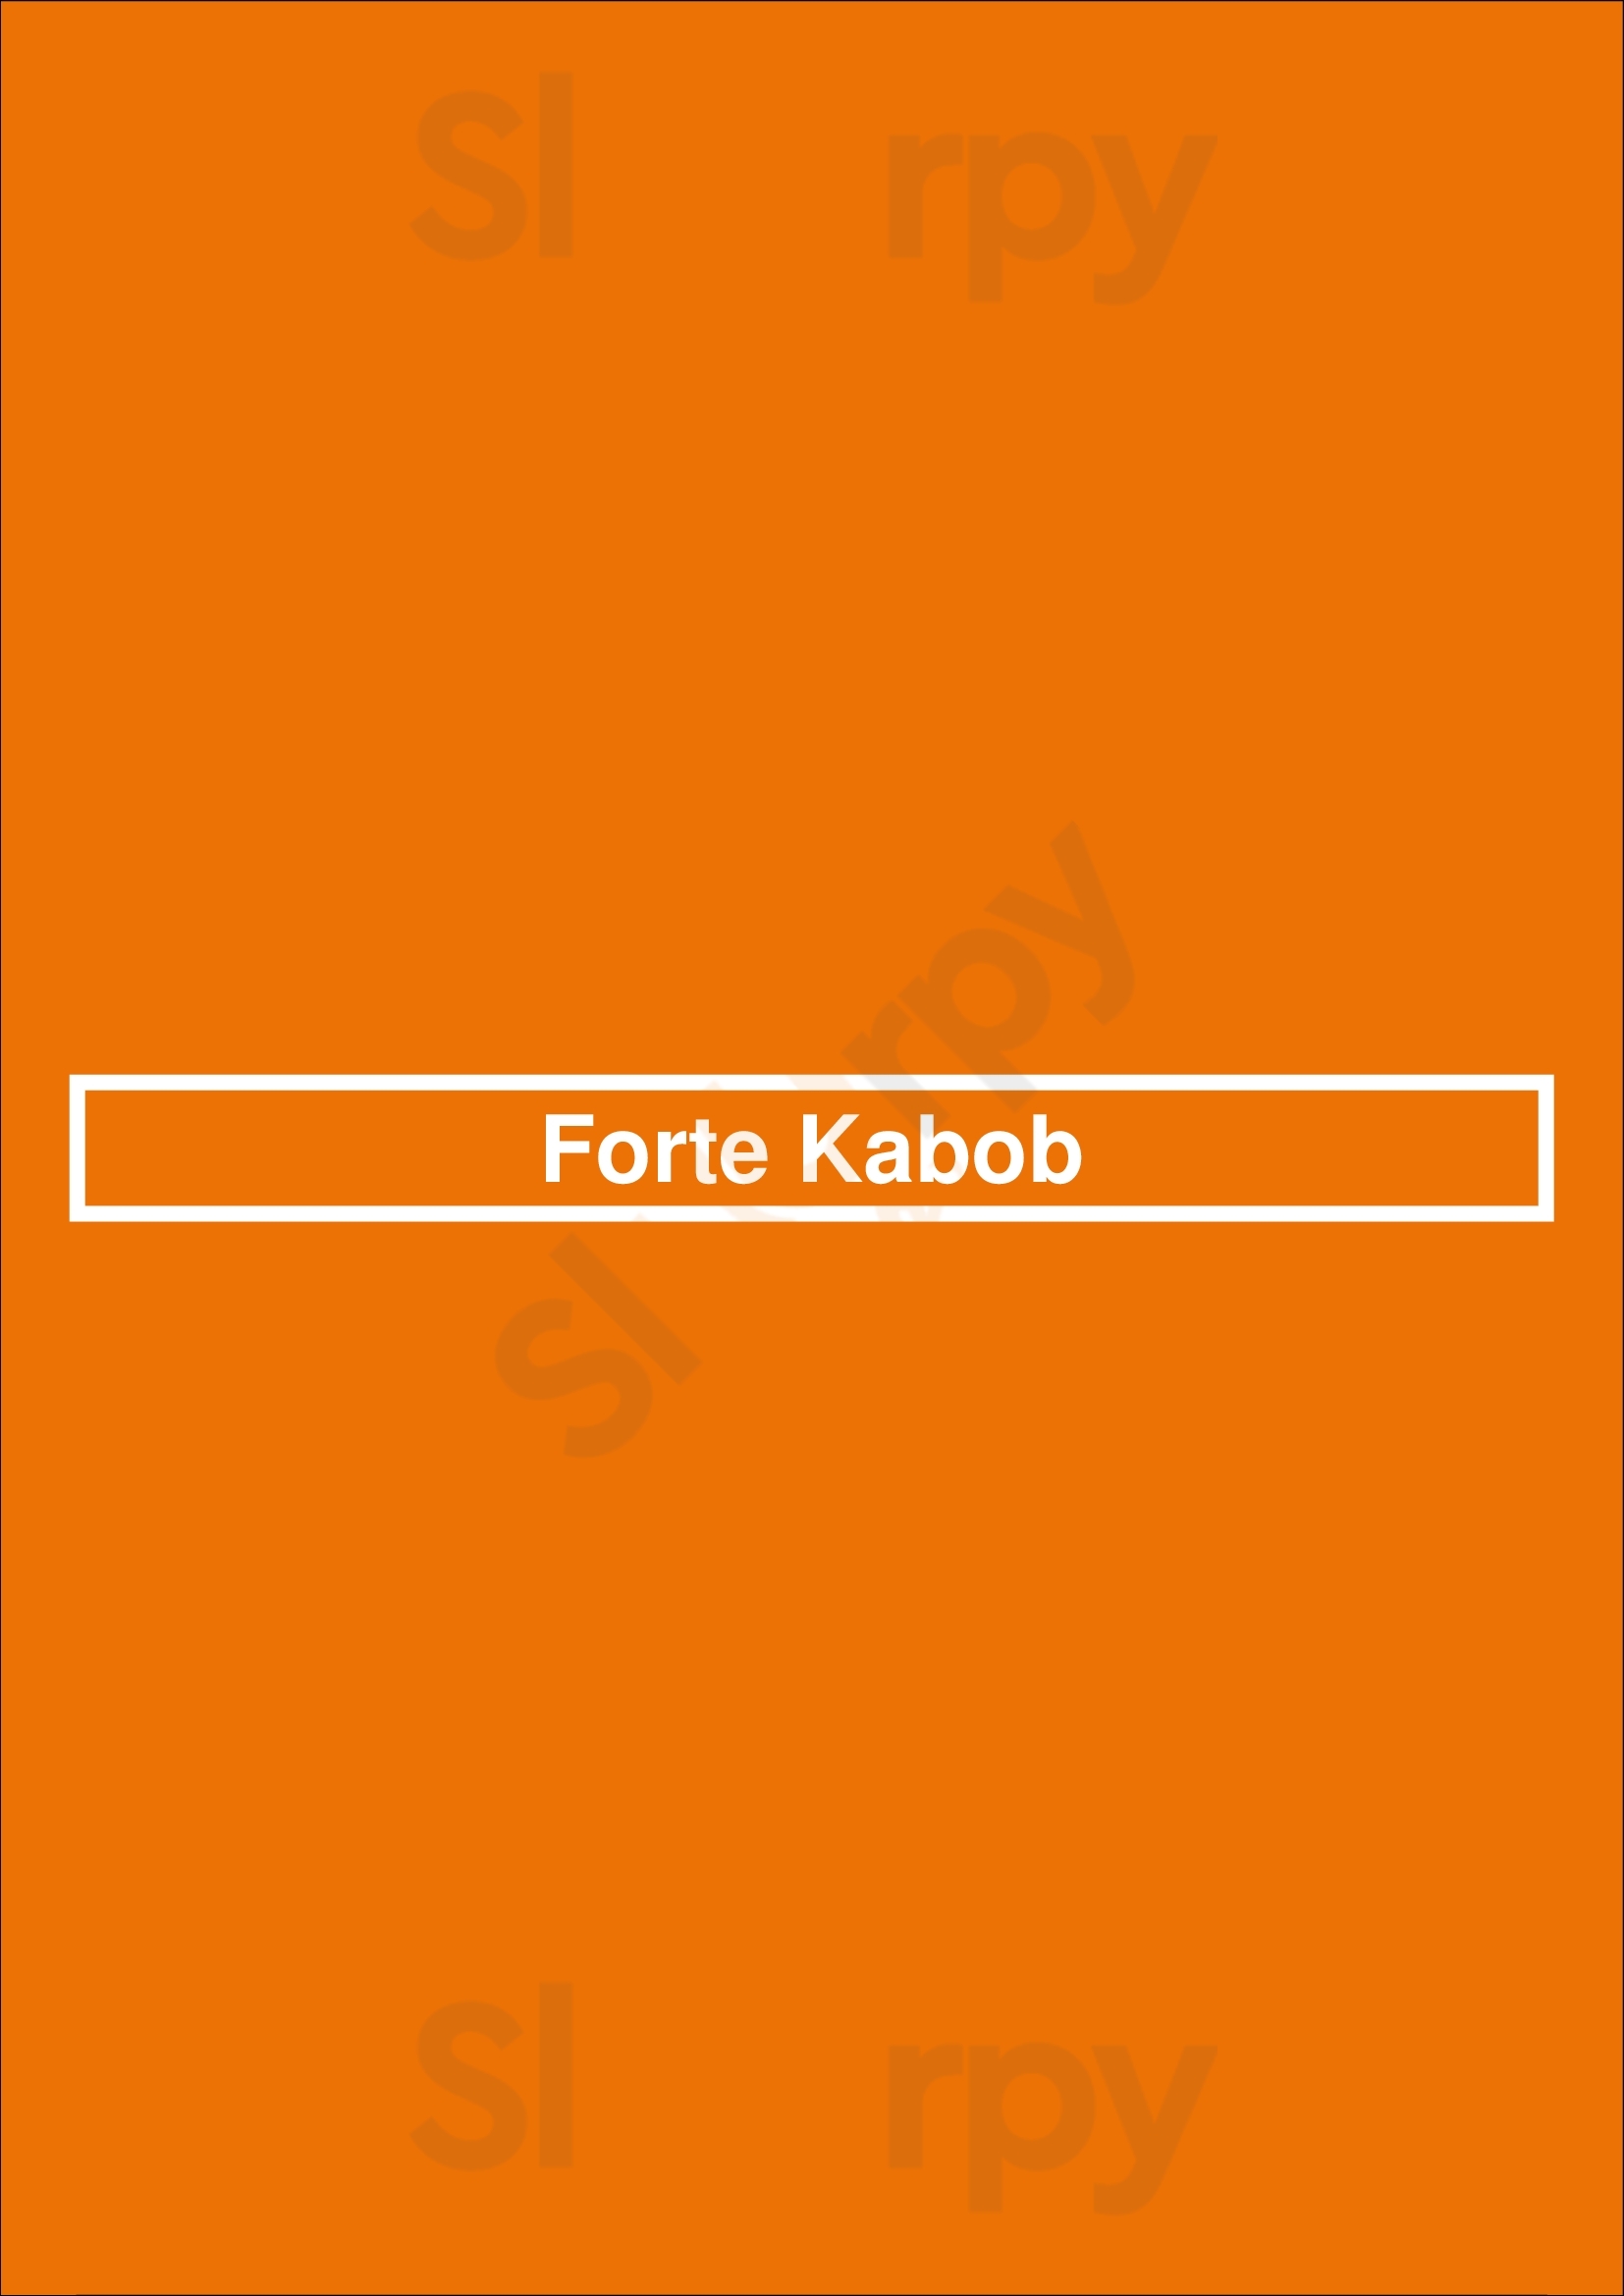 Forte Kabob Newport Beach Menu - 1